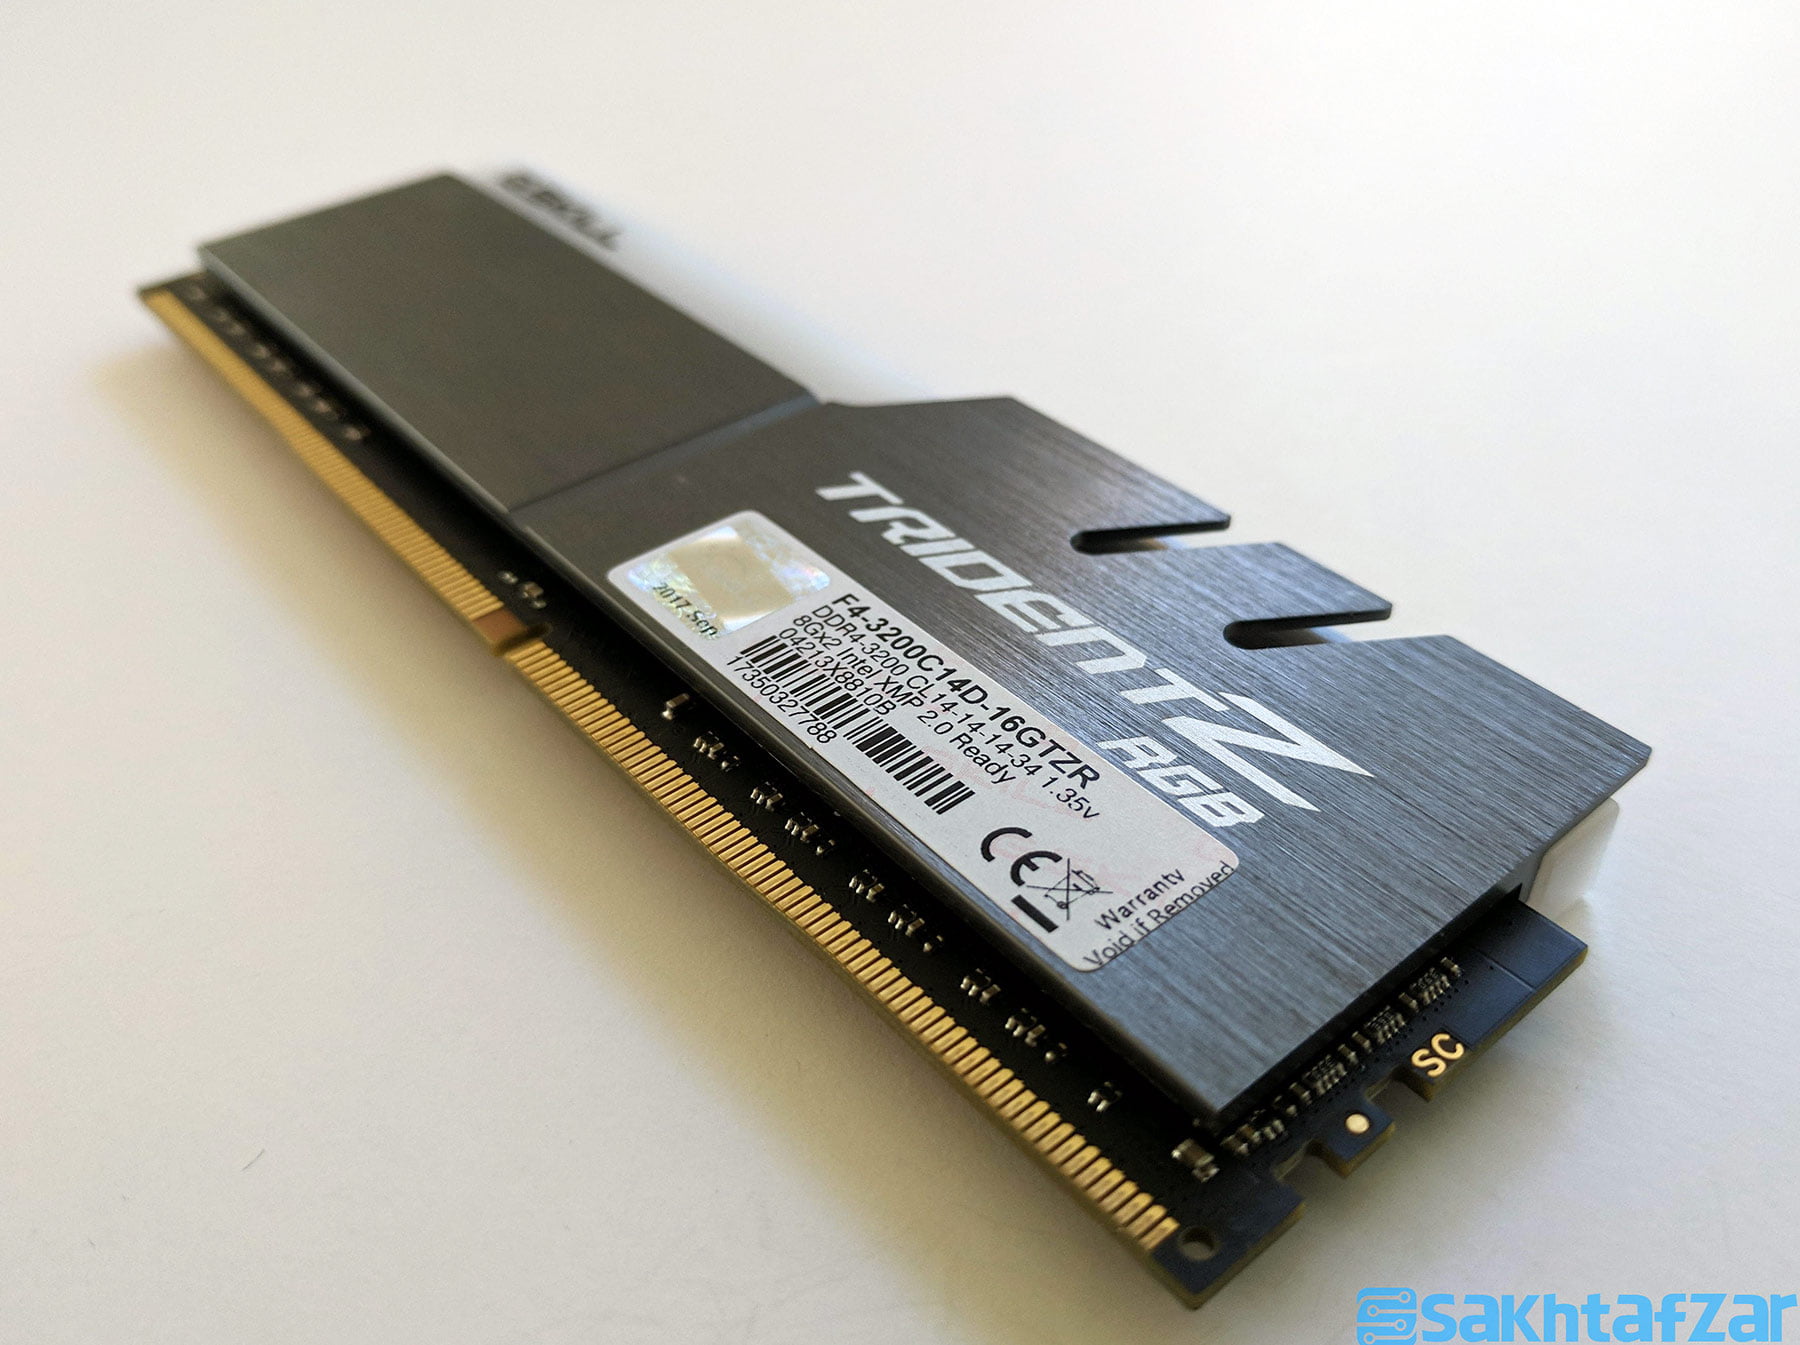 بررسی حافظه G.Skill Trident Z RGB DDR4-3200C14D-16GTZR